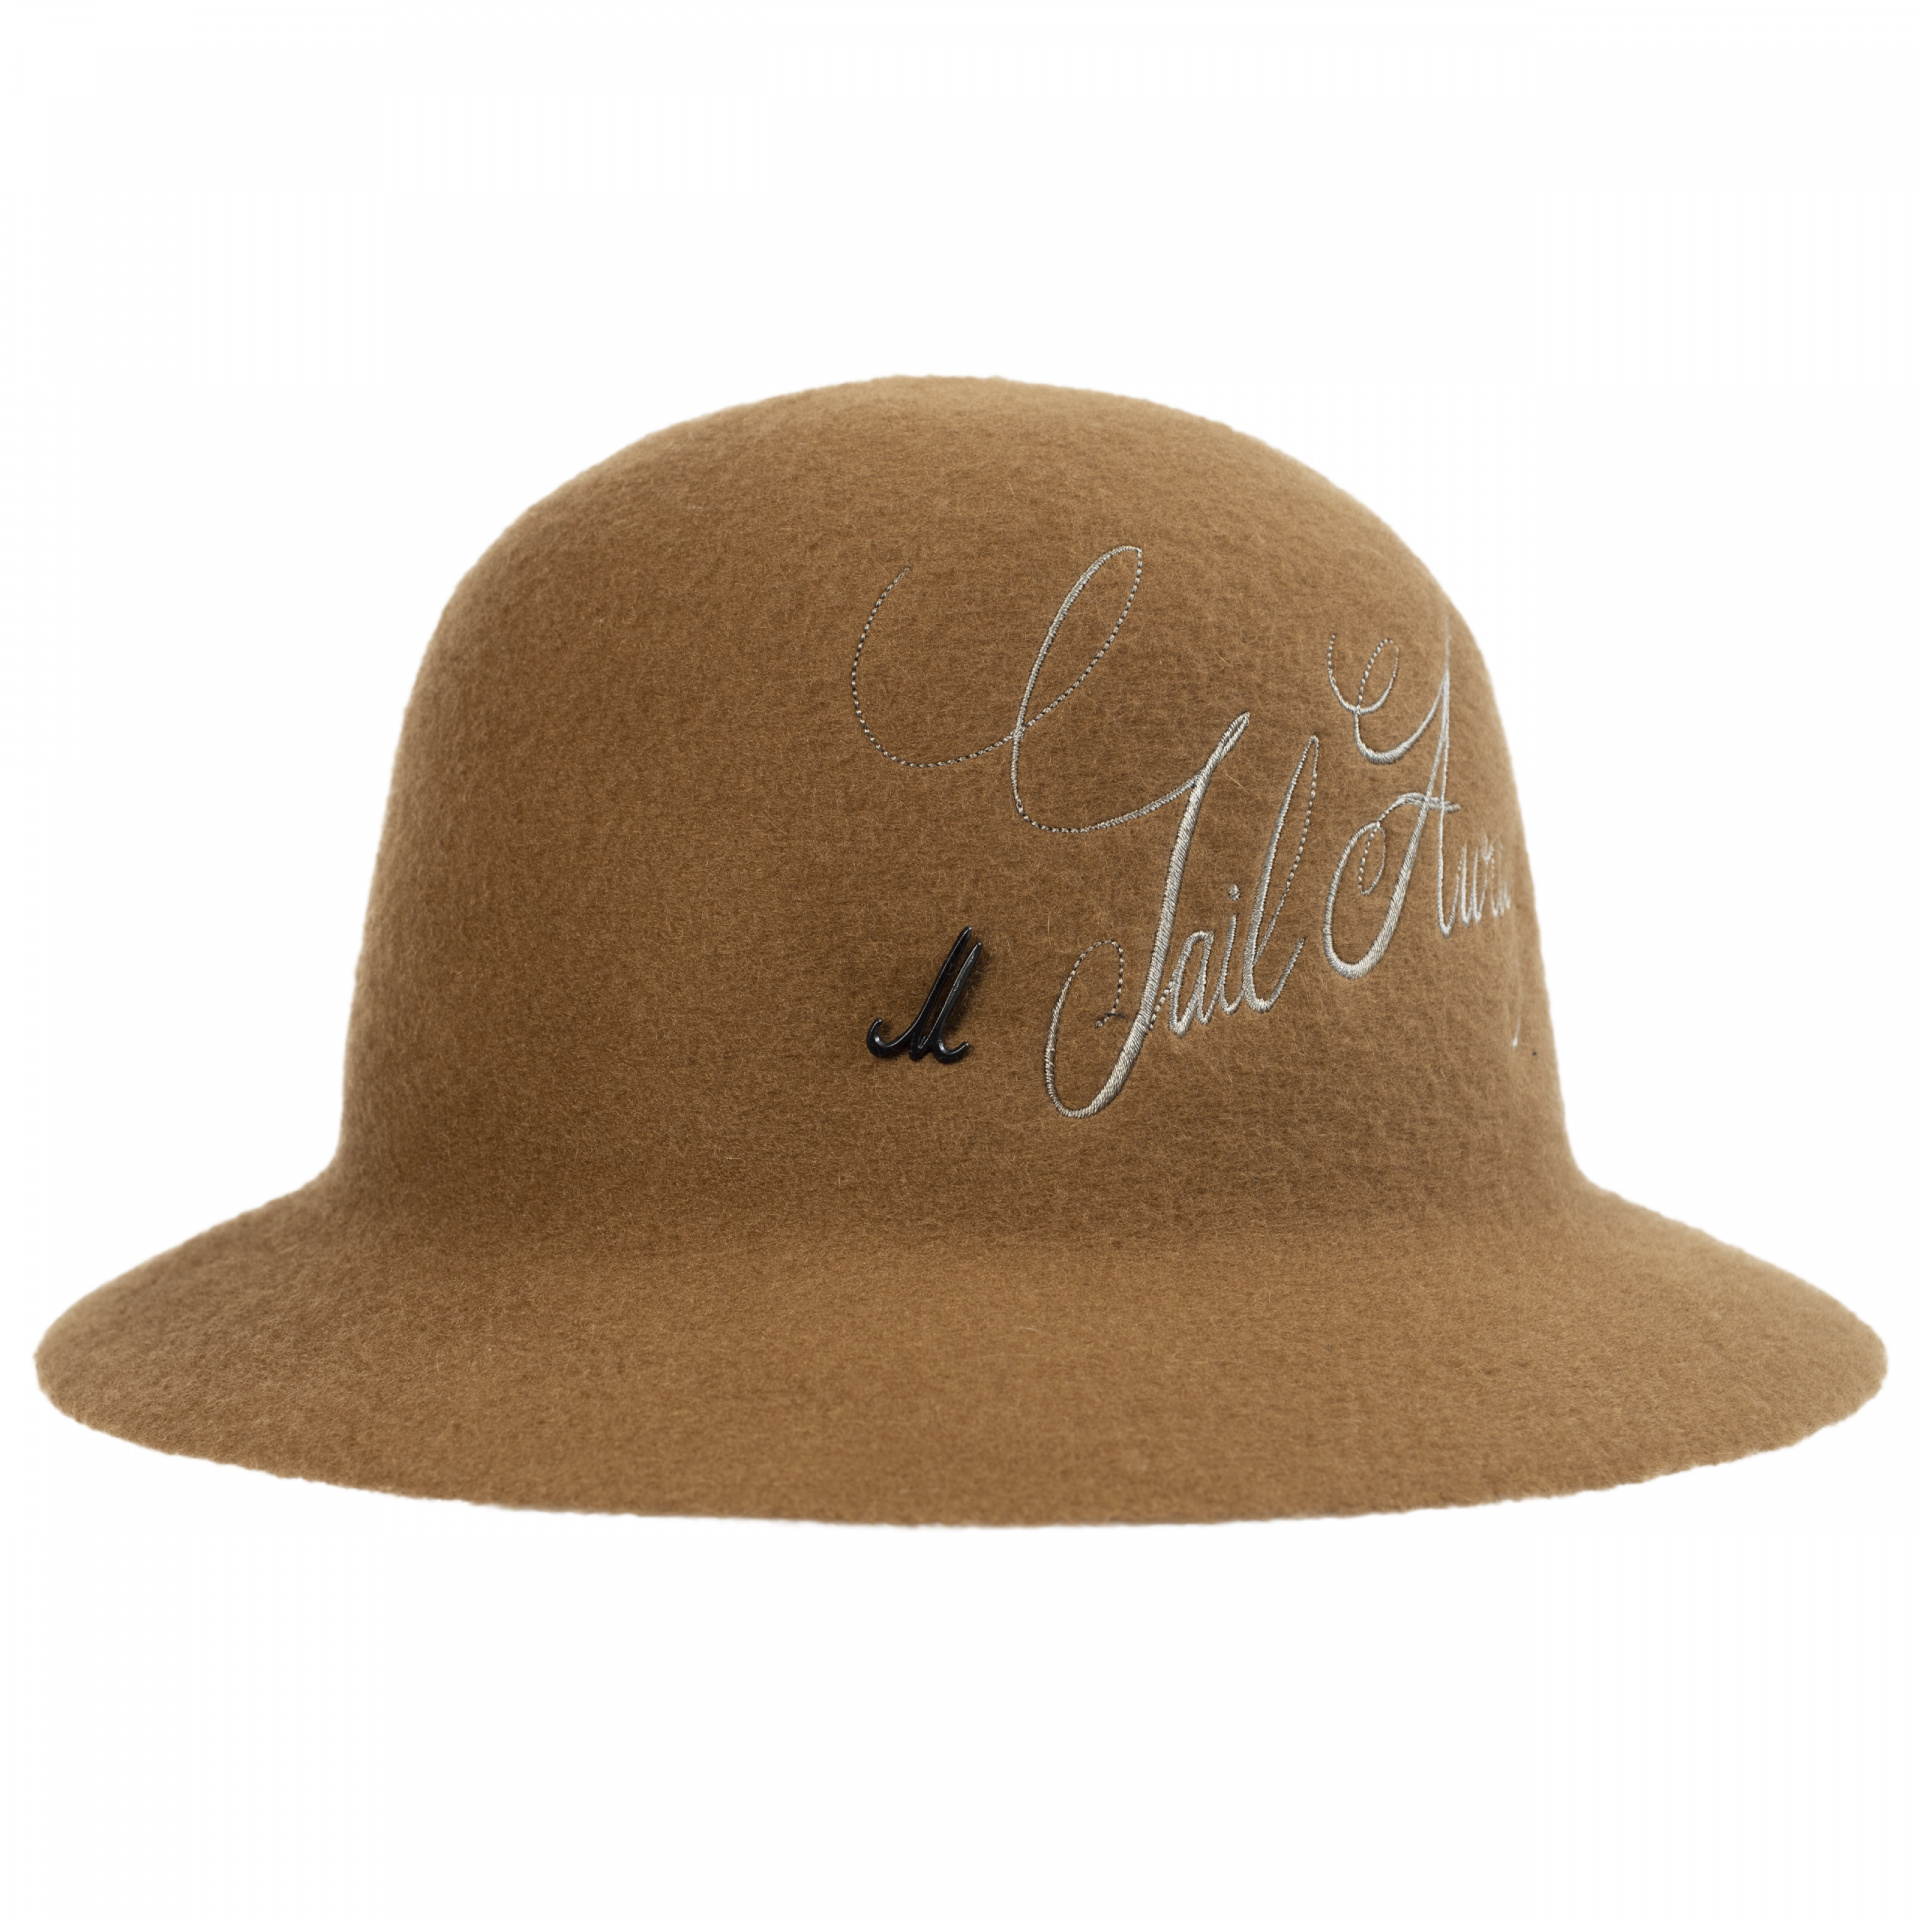 Junya Watanabe Embroidered logo hat in brown